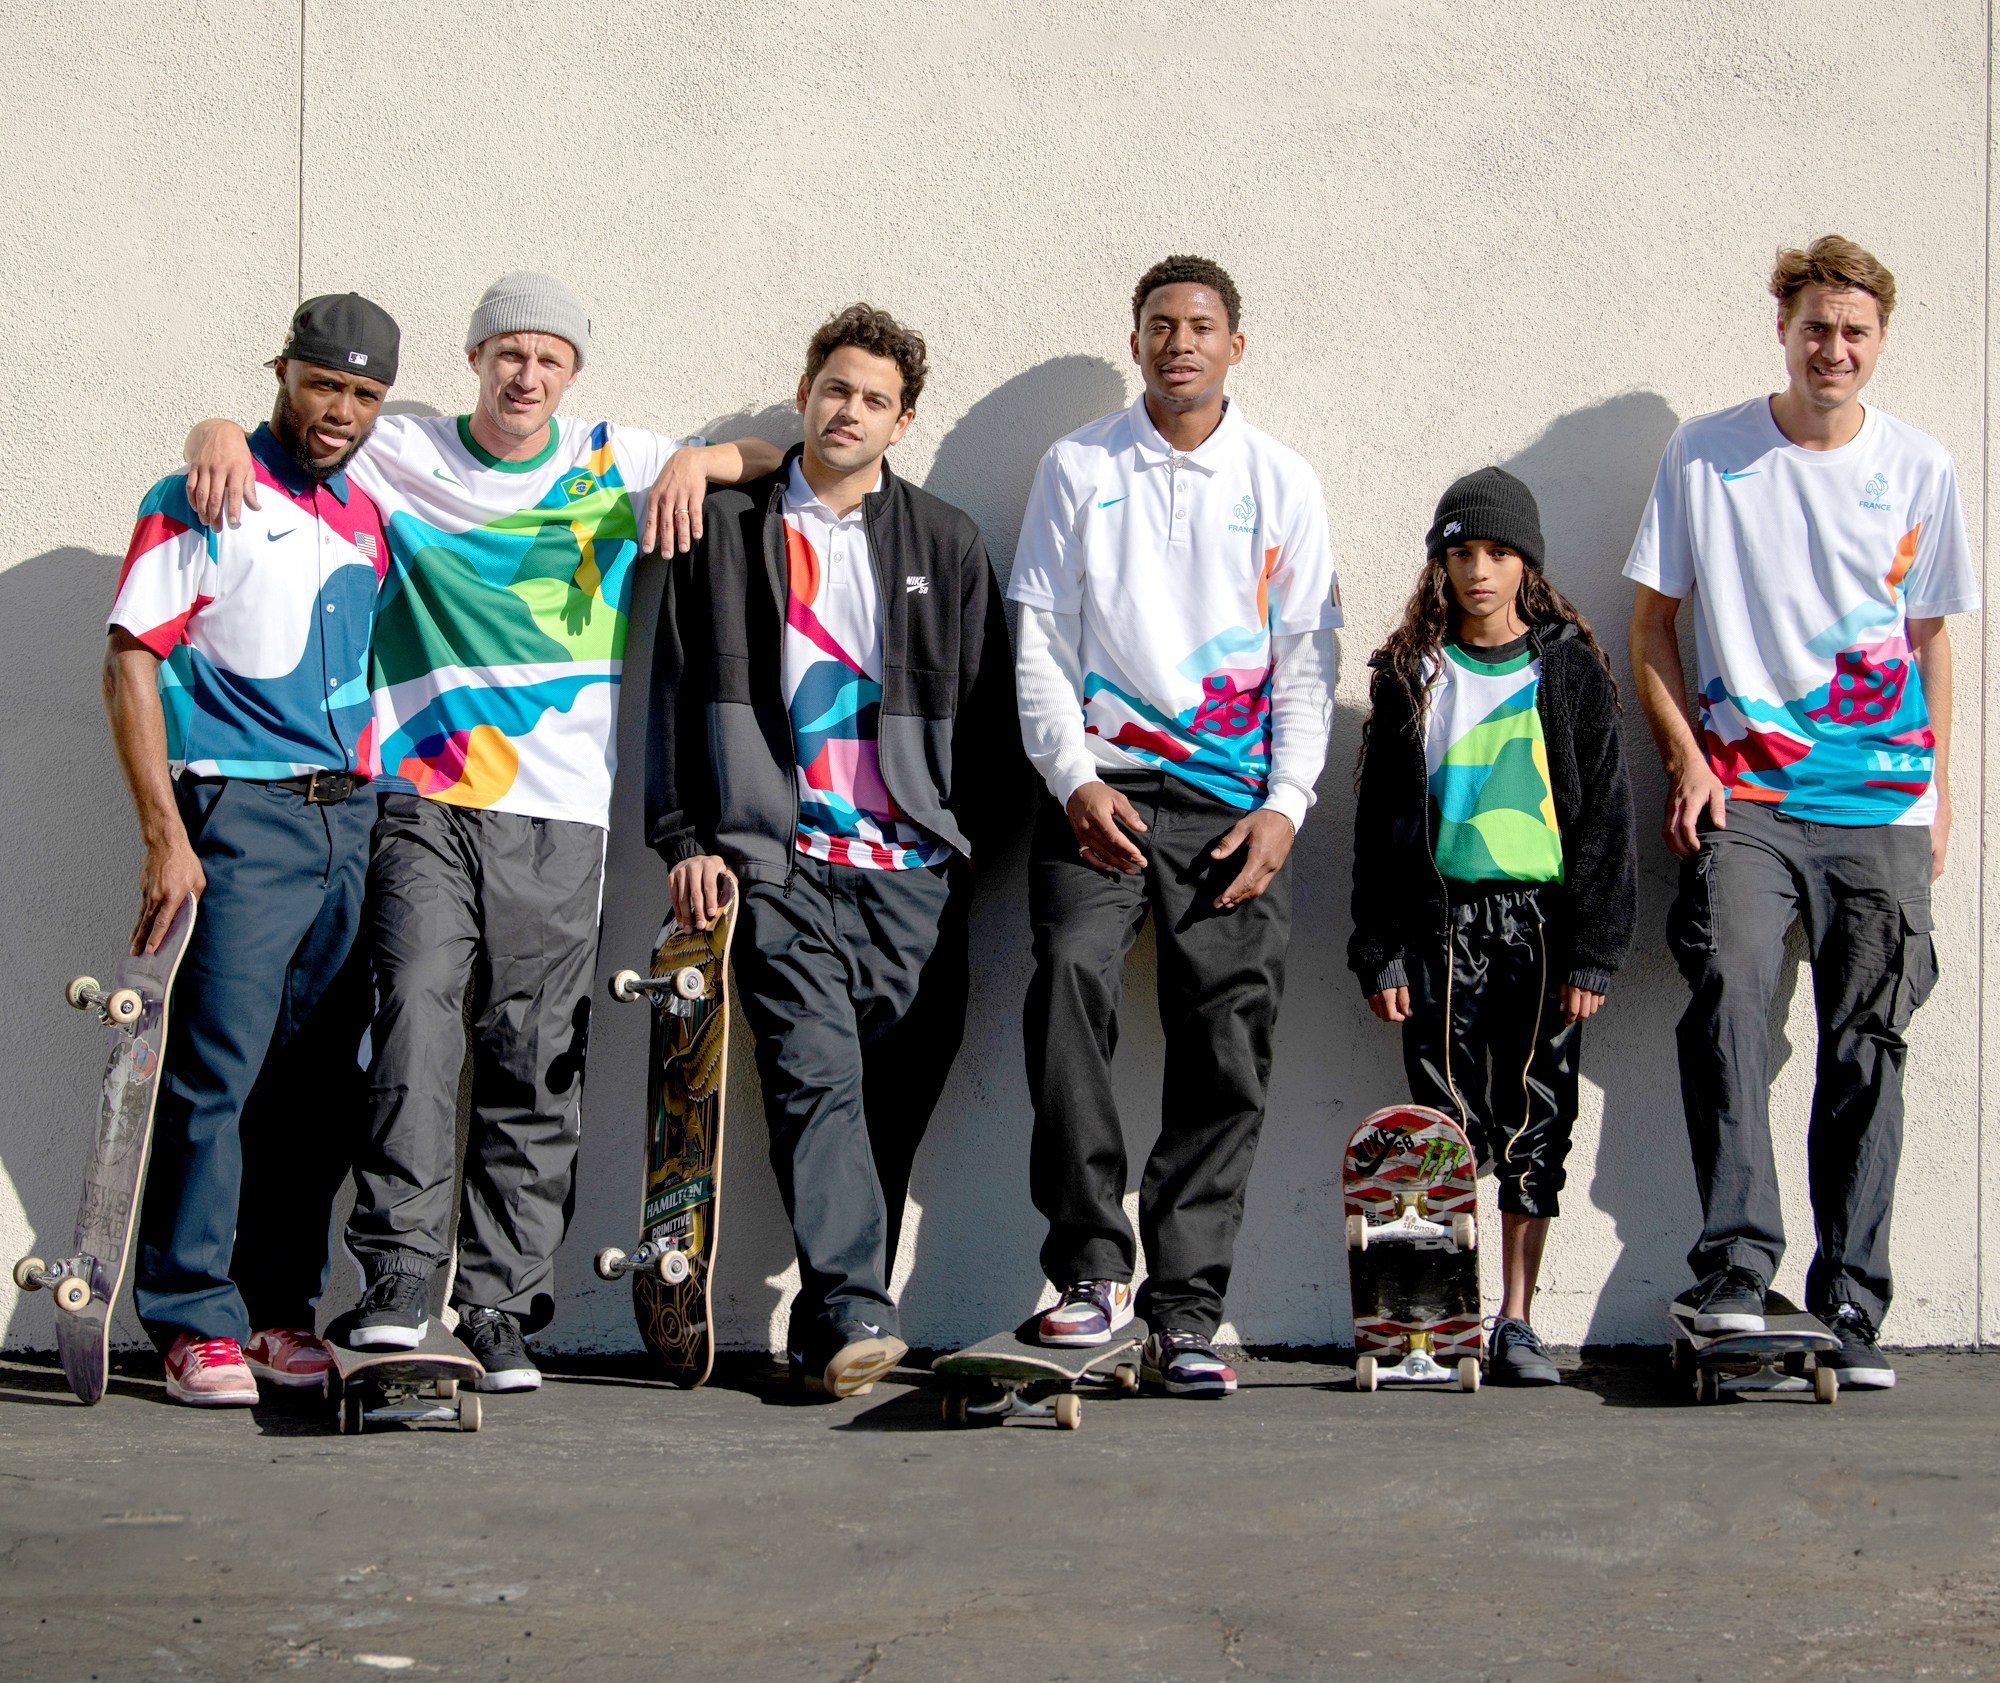 Introducing USA's Olympic Skateboarding via Transworld Skate" by Dave Carnie Board Retailers Association